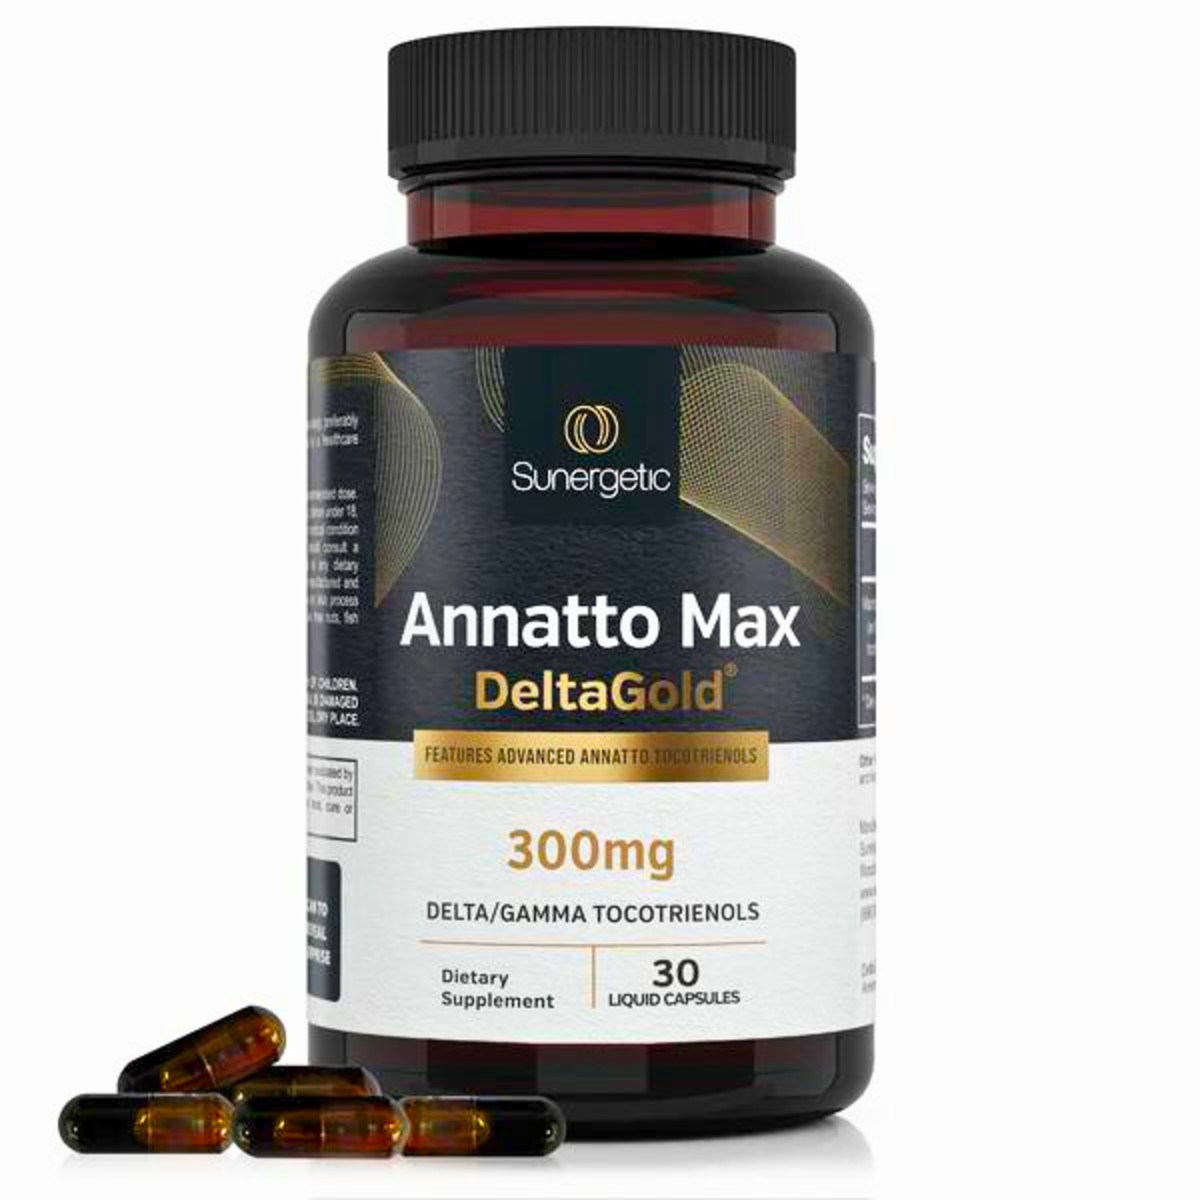 A bottle of Sunergetic Annatto Max DeltaGold vitamin E supplements